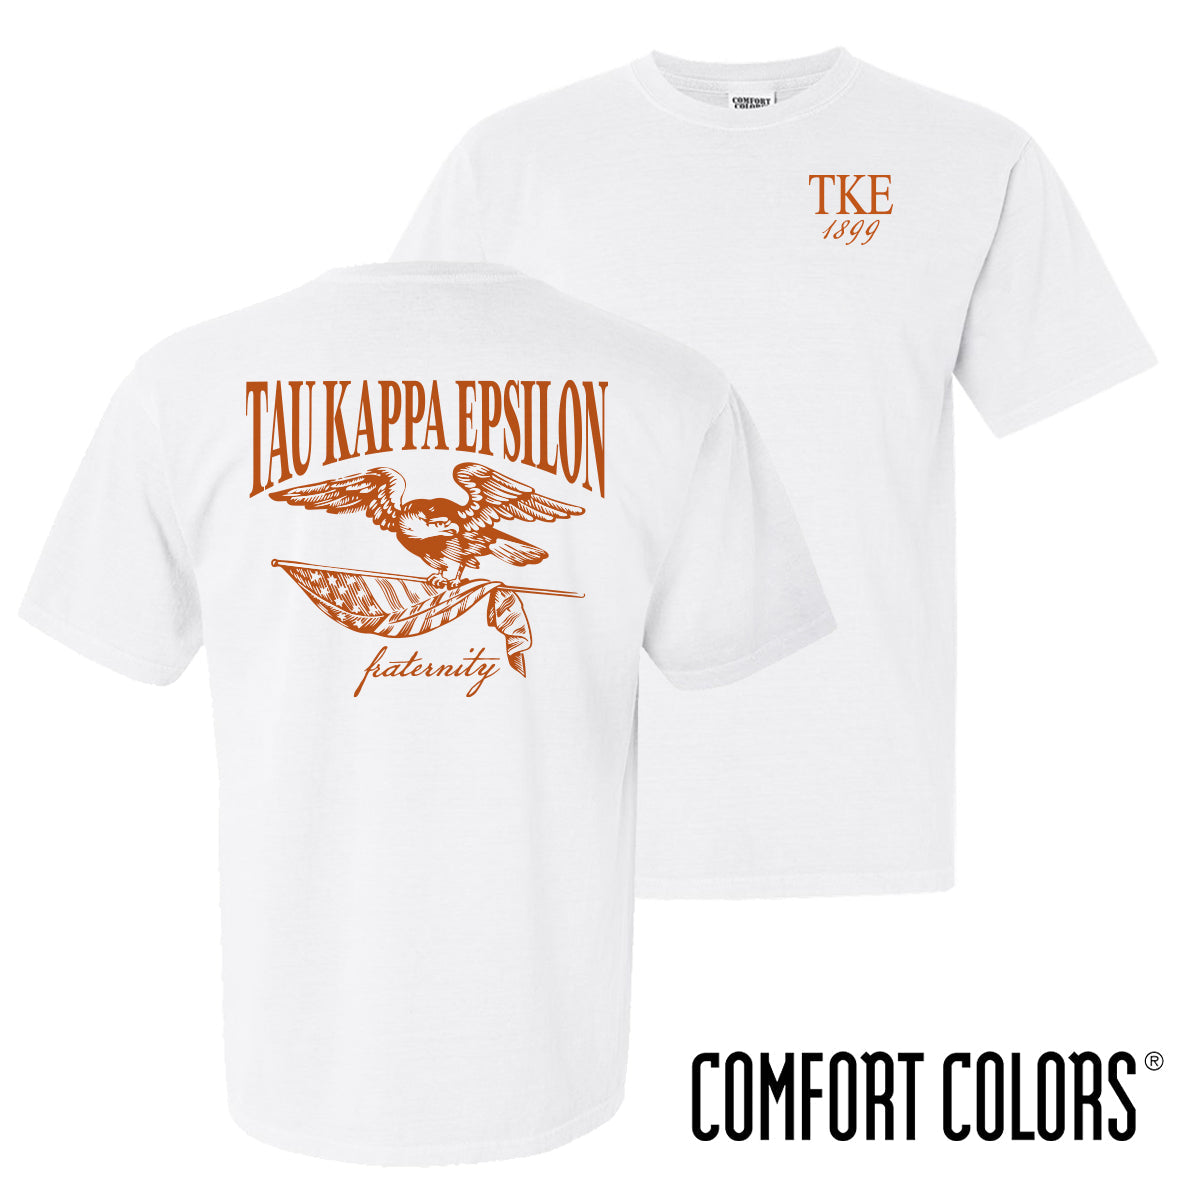 TKE Comfort Colors Happy Earth White Short Sleeve Tee S / Tau Kappa Epsilon